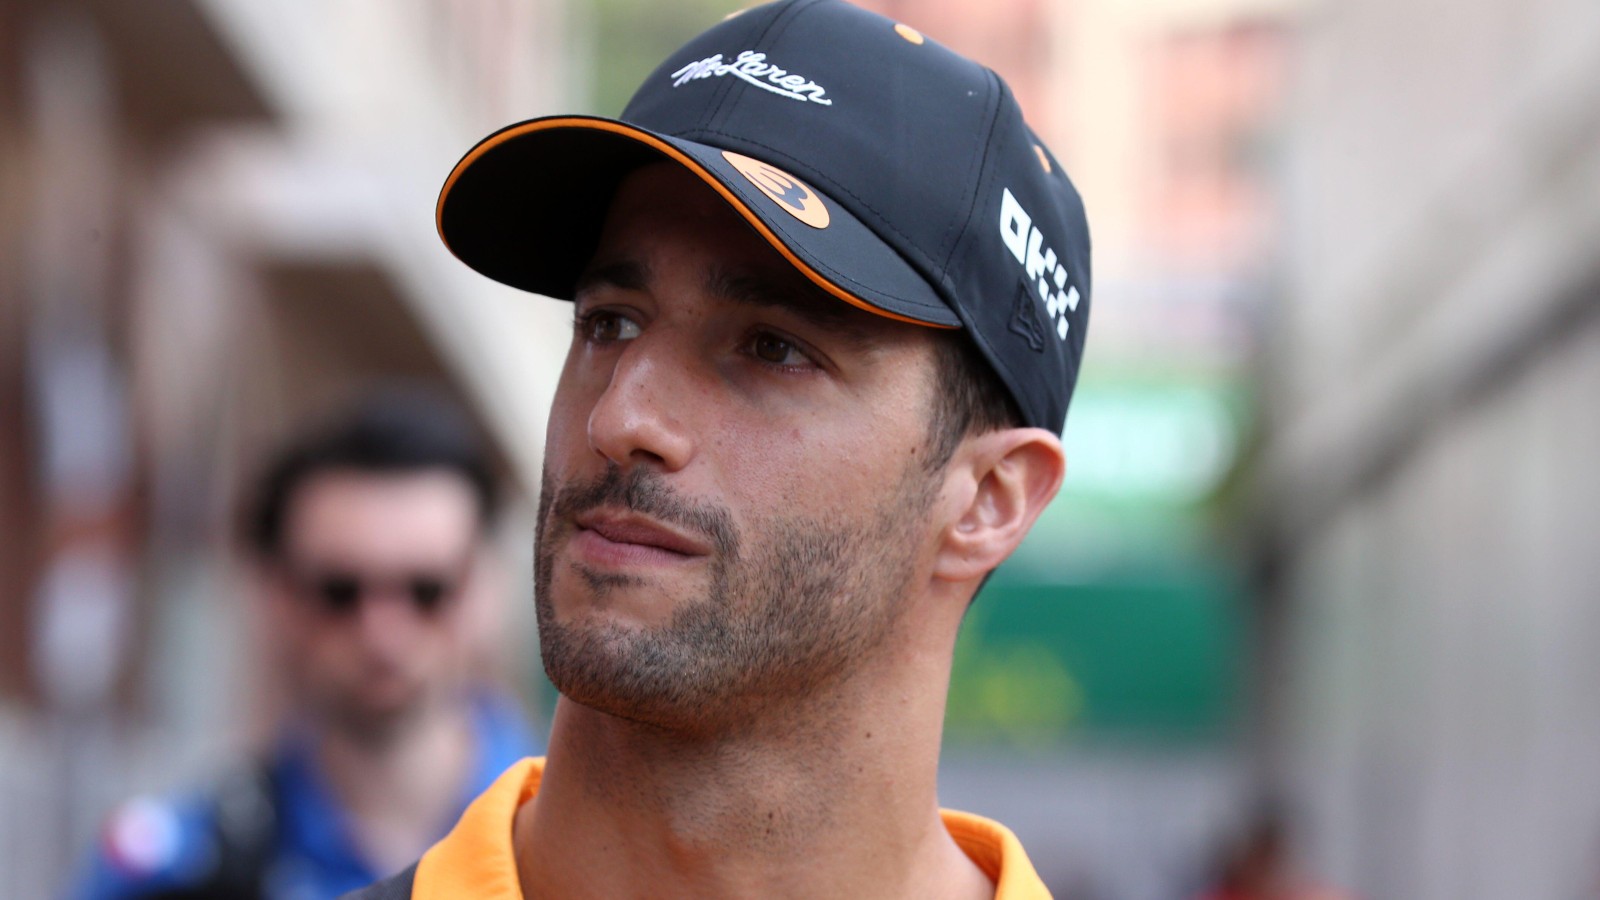 Daniel Ricciardo, McLaren, looking serious. Monaco, May 2022.